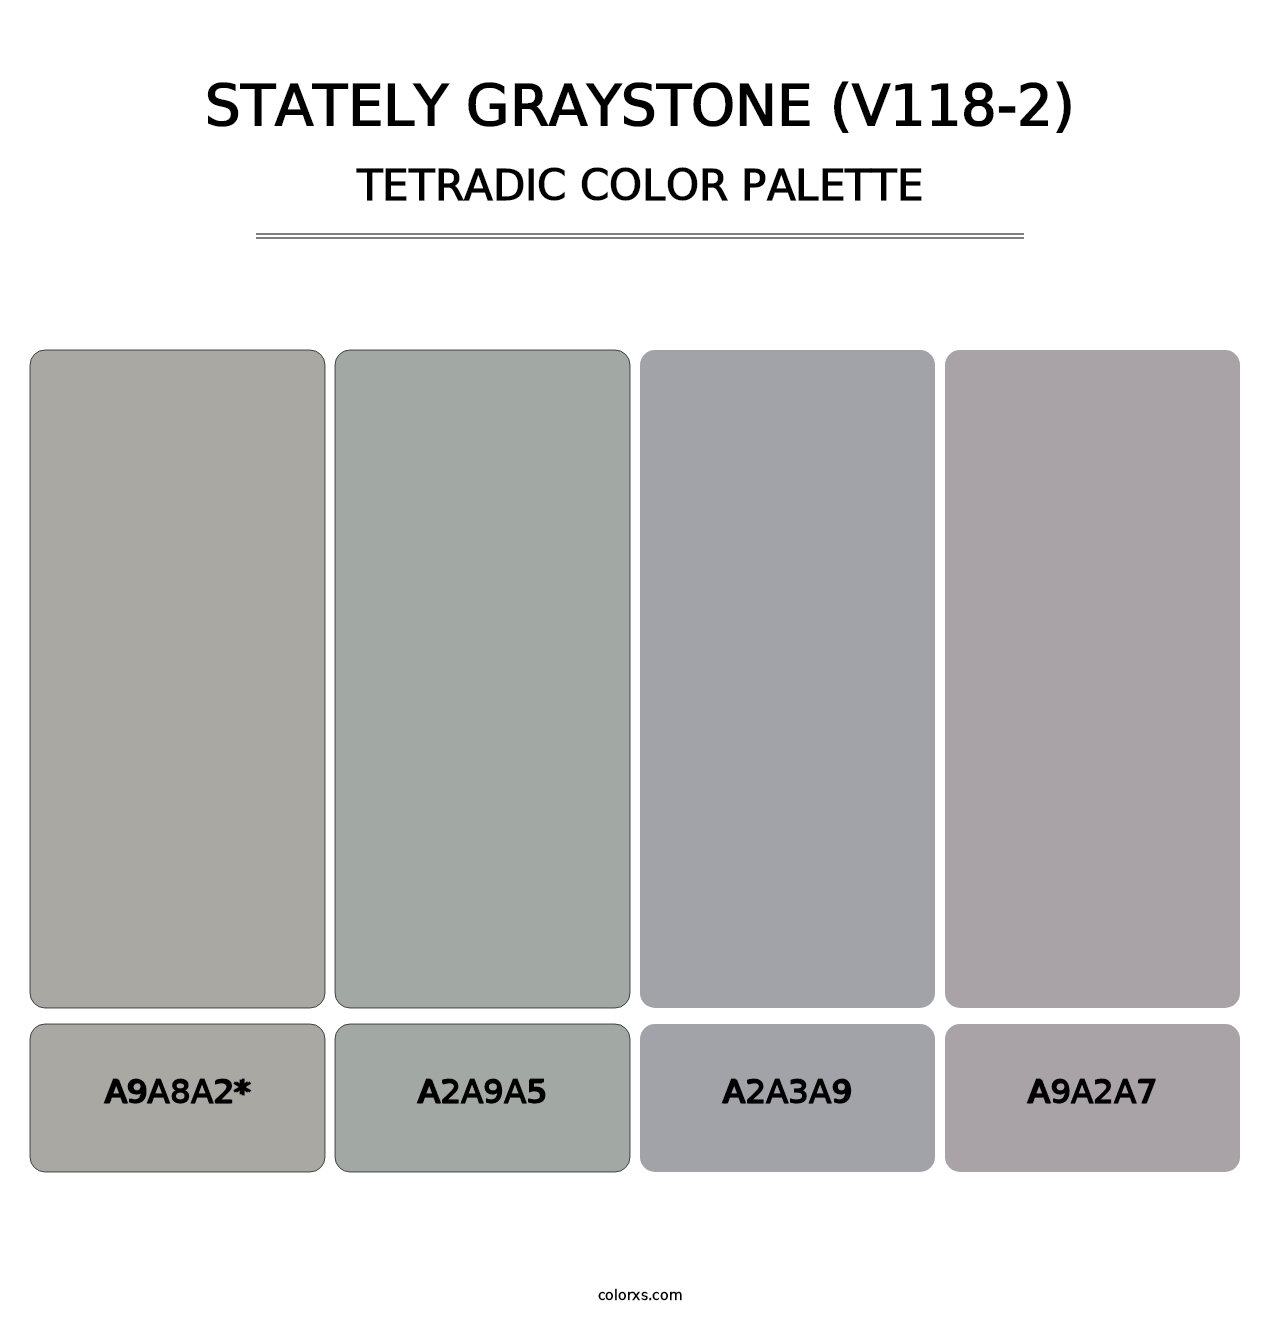 Stately Graystone (V118-2) - Tetradic Color Palette